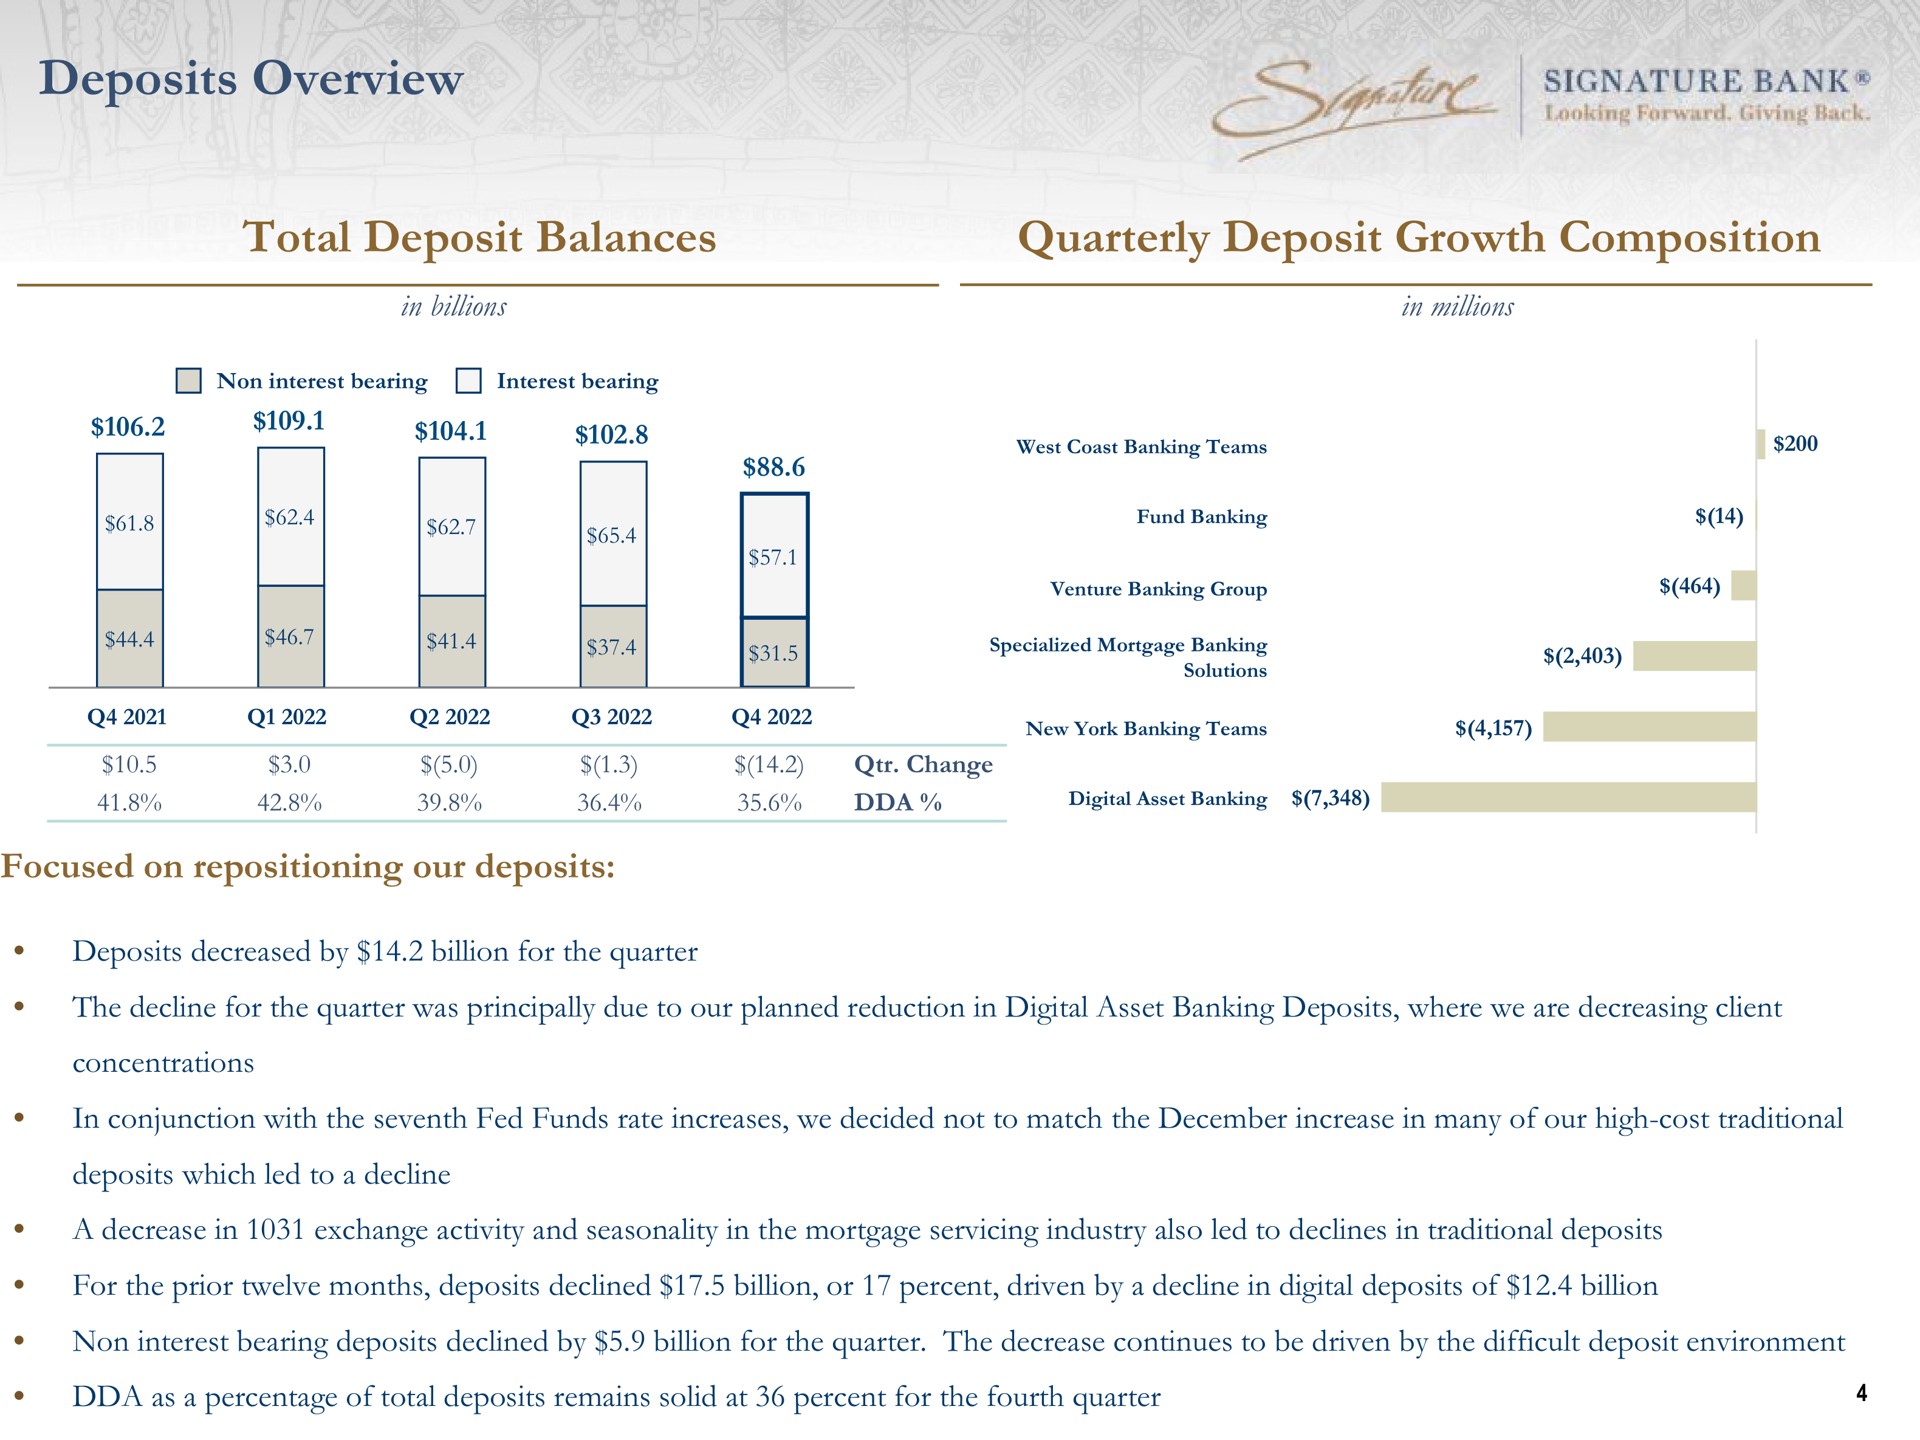 deposits overview total deposit balances quarterly deposit growth composition i signature bank | Signature Bank